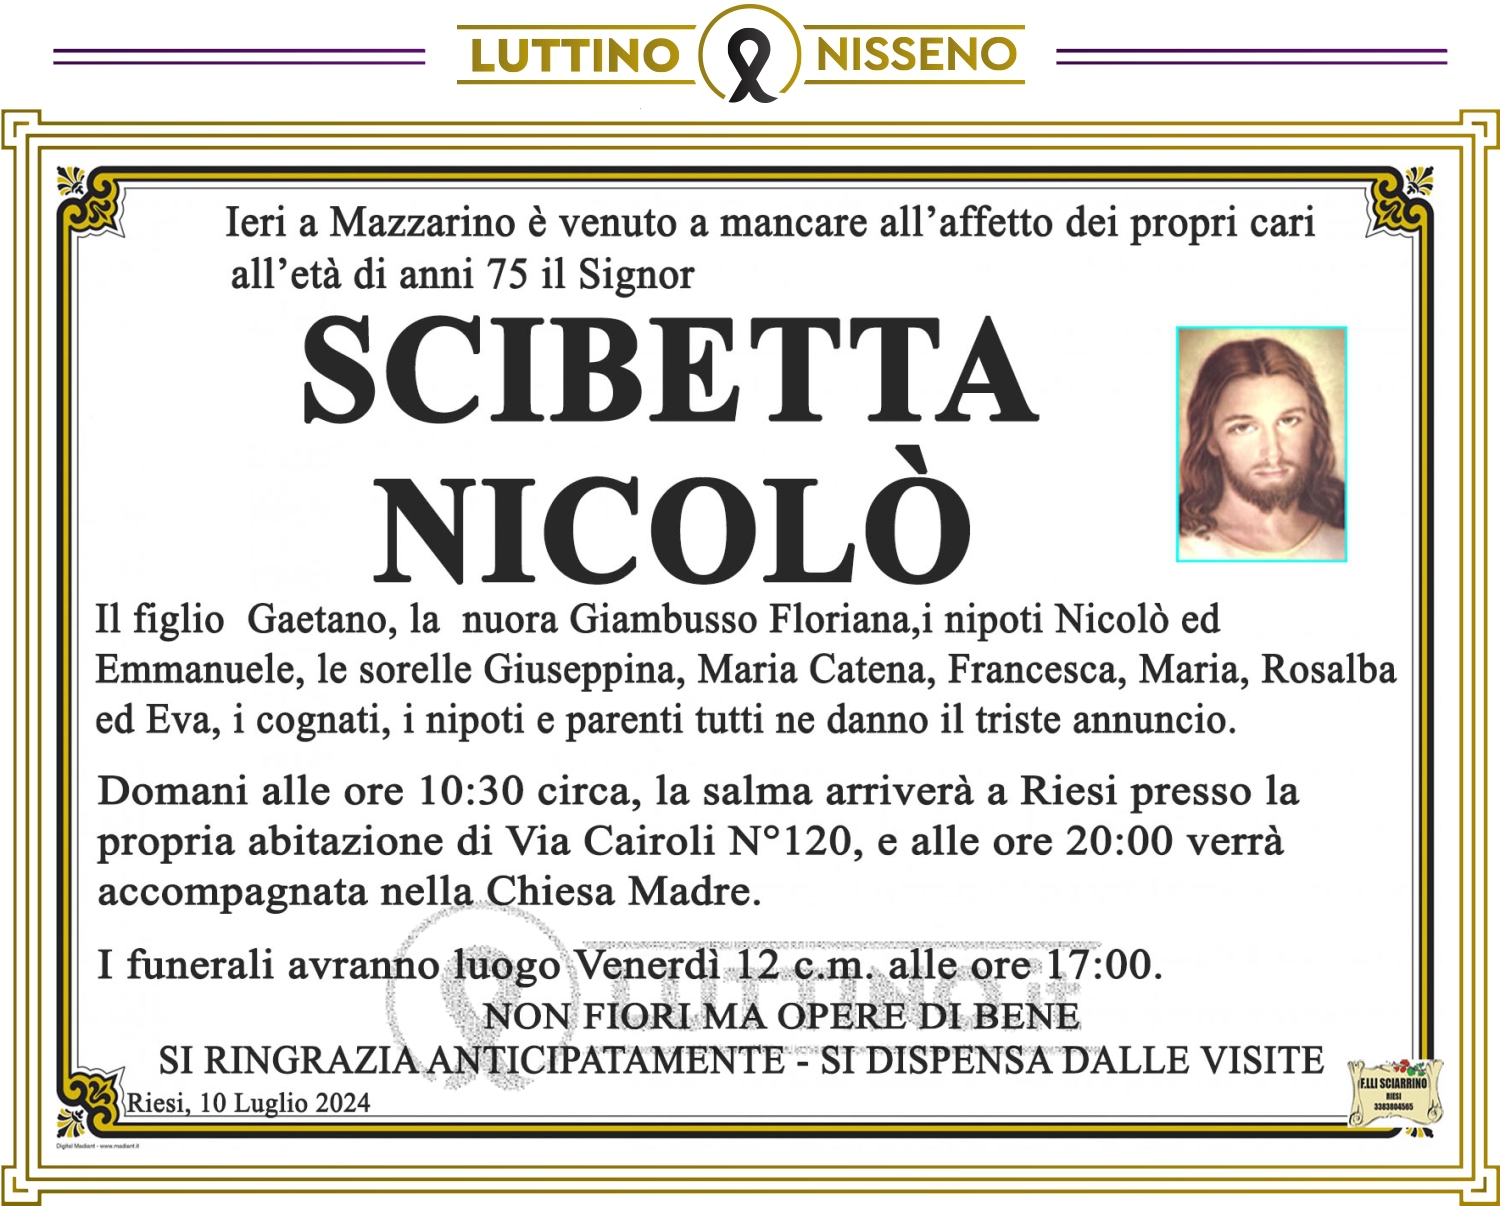 Nicolò Scibetta